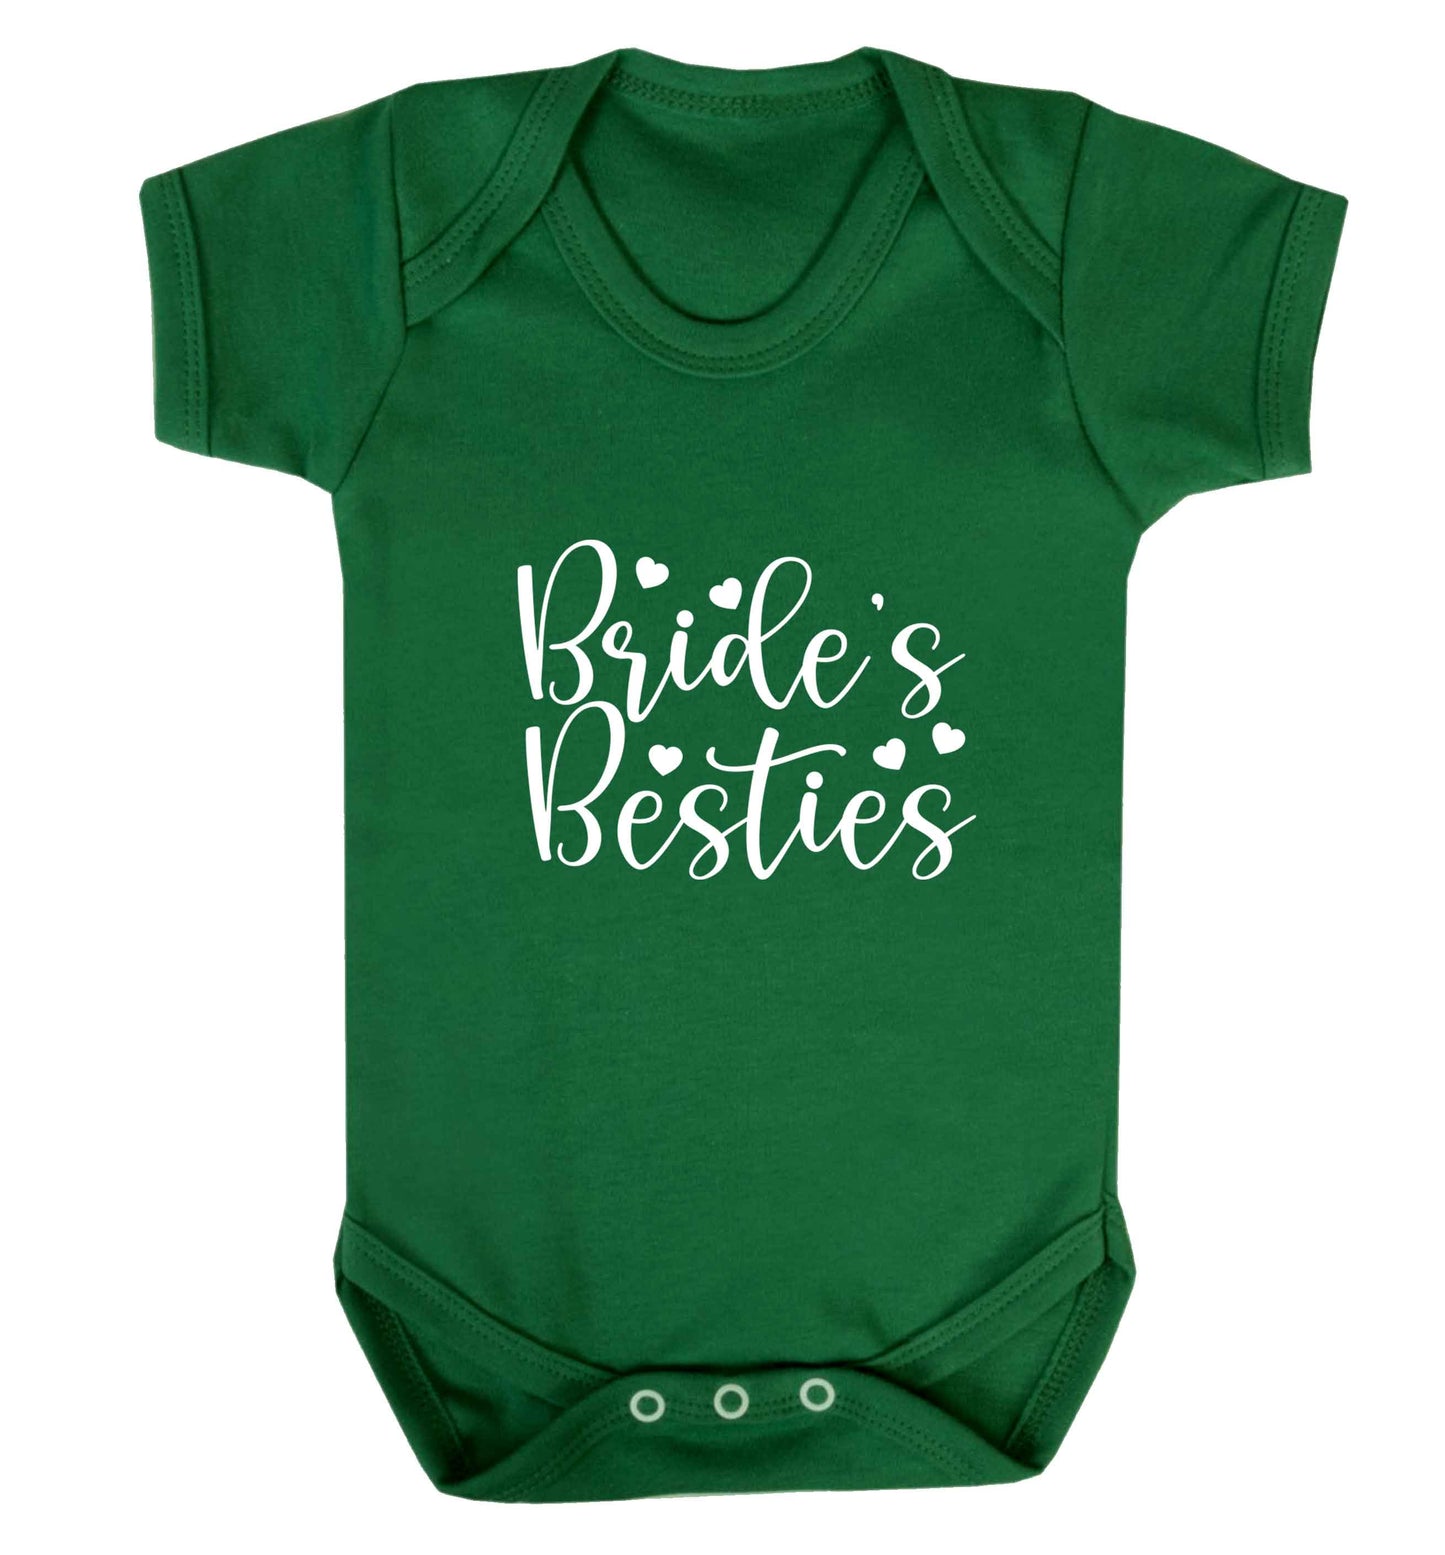 Brides besties baby vest green 18-24 months